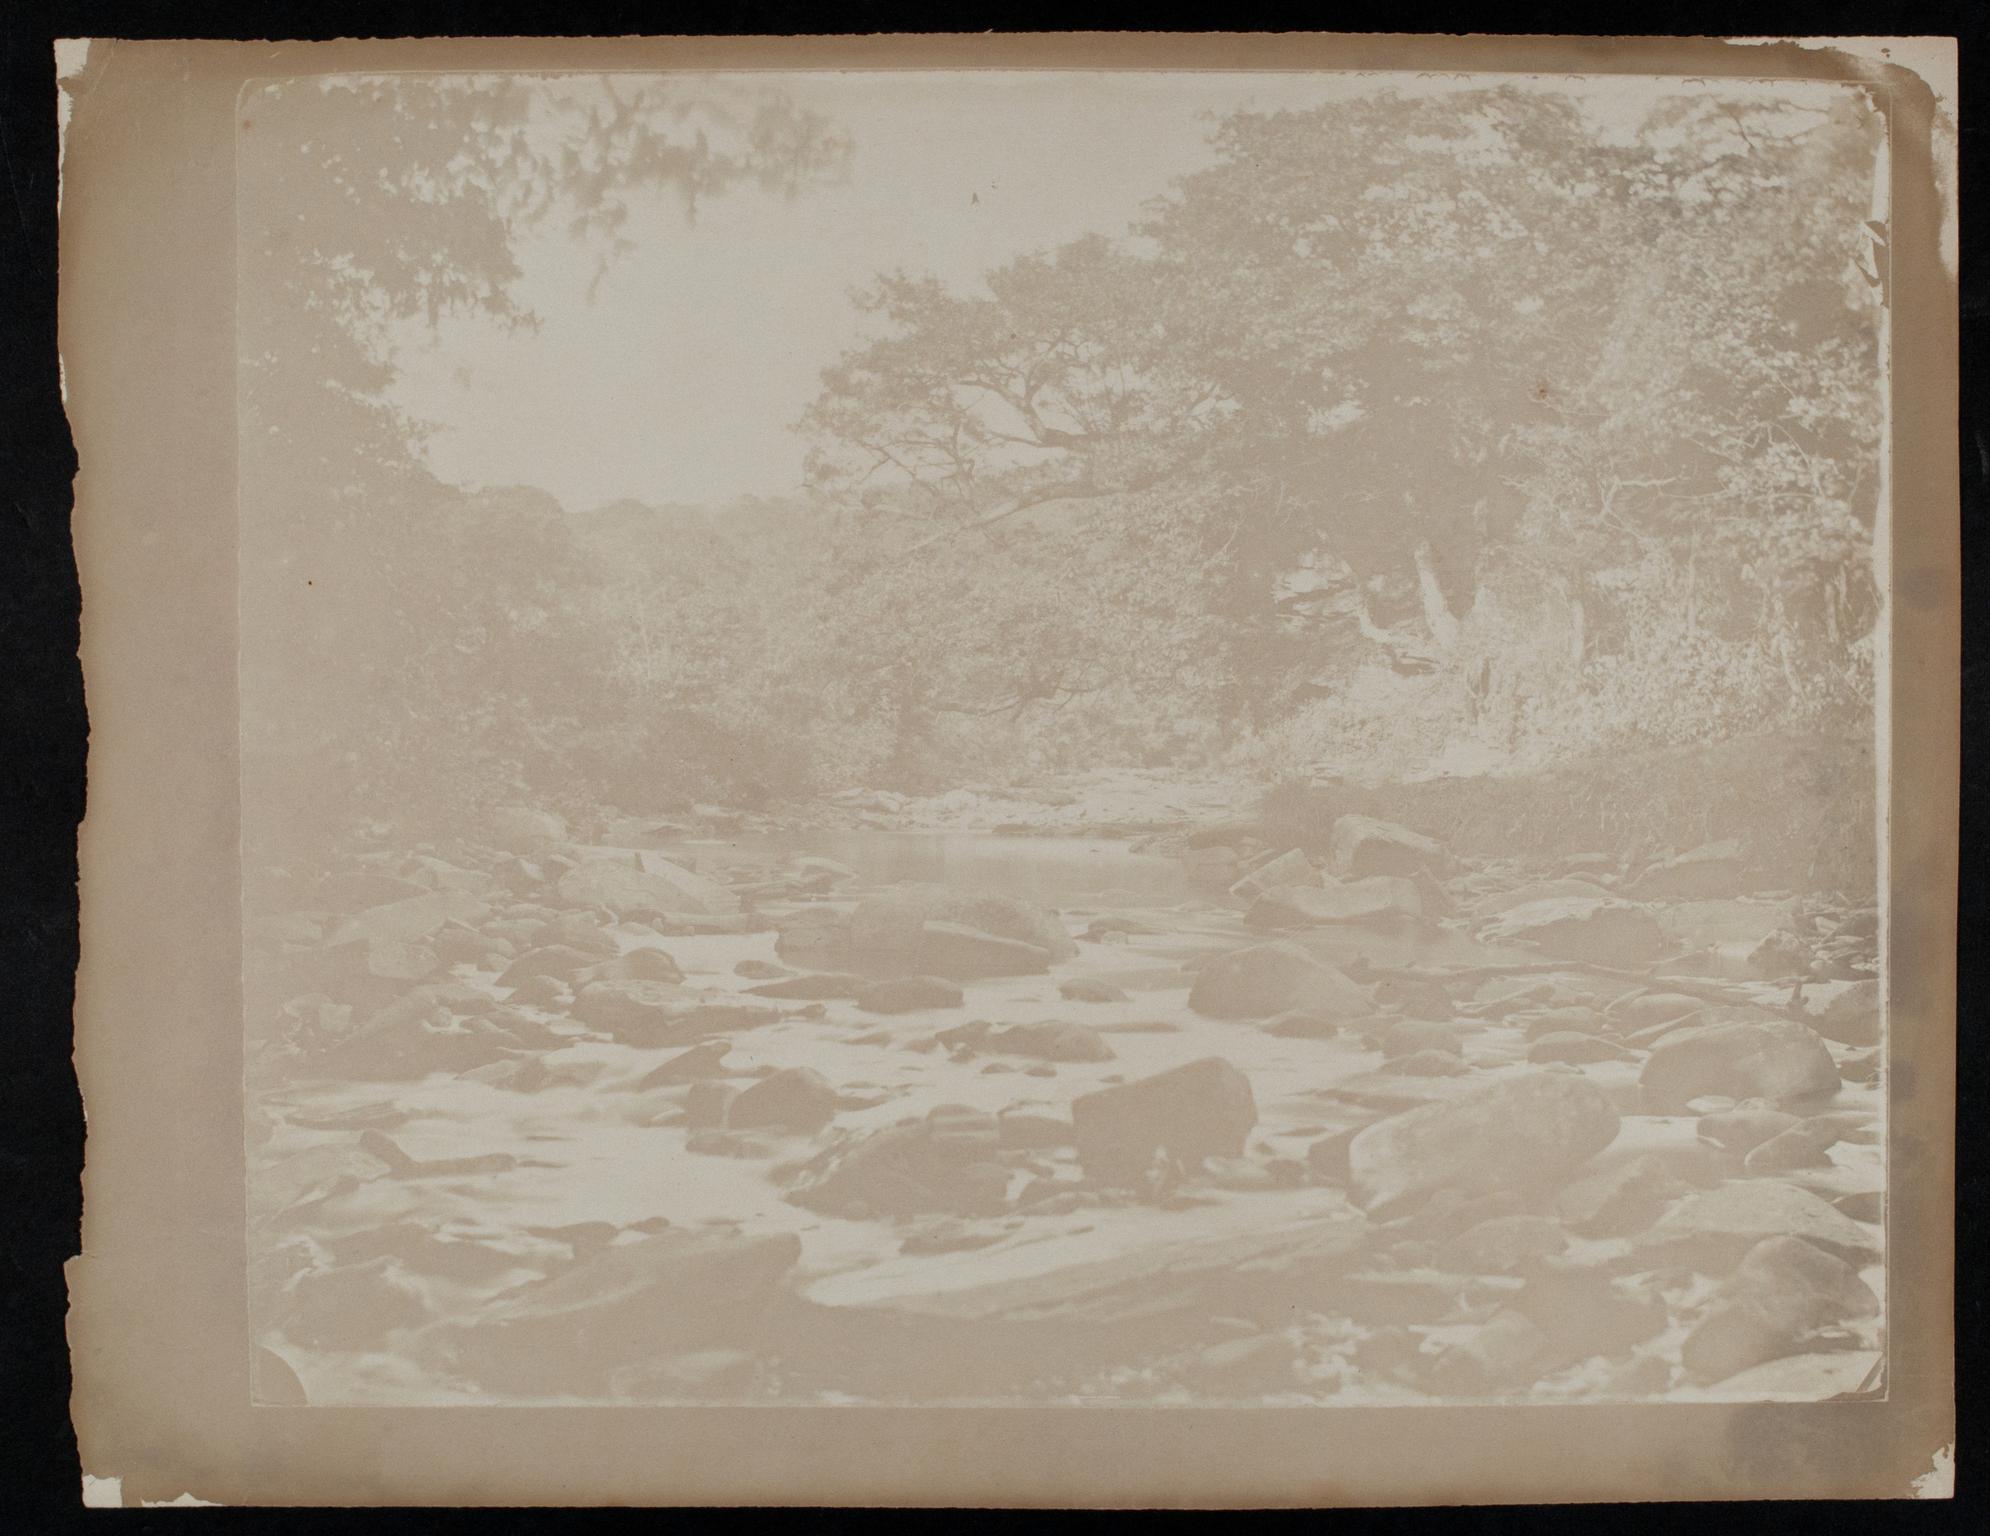 Rock strewn river, photograph